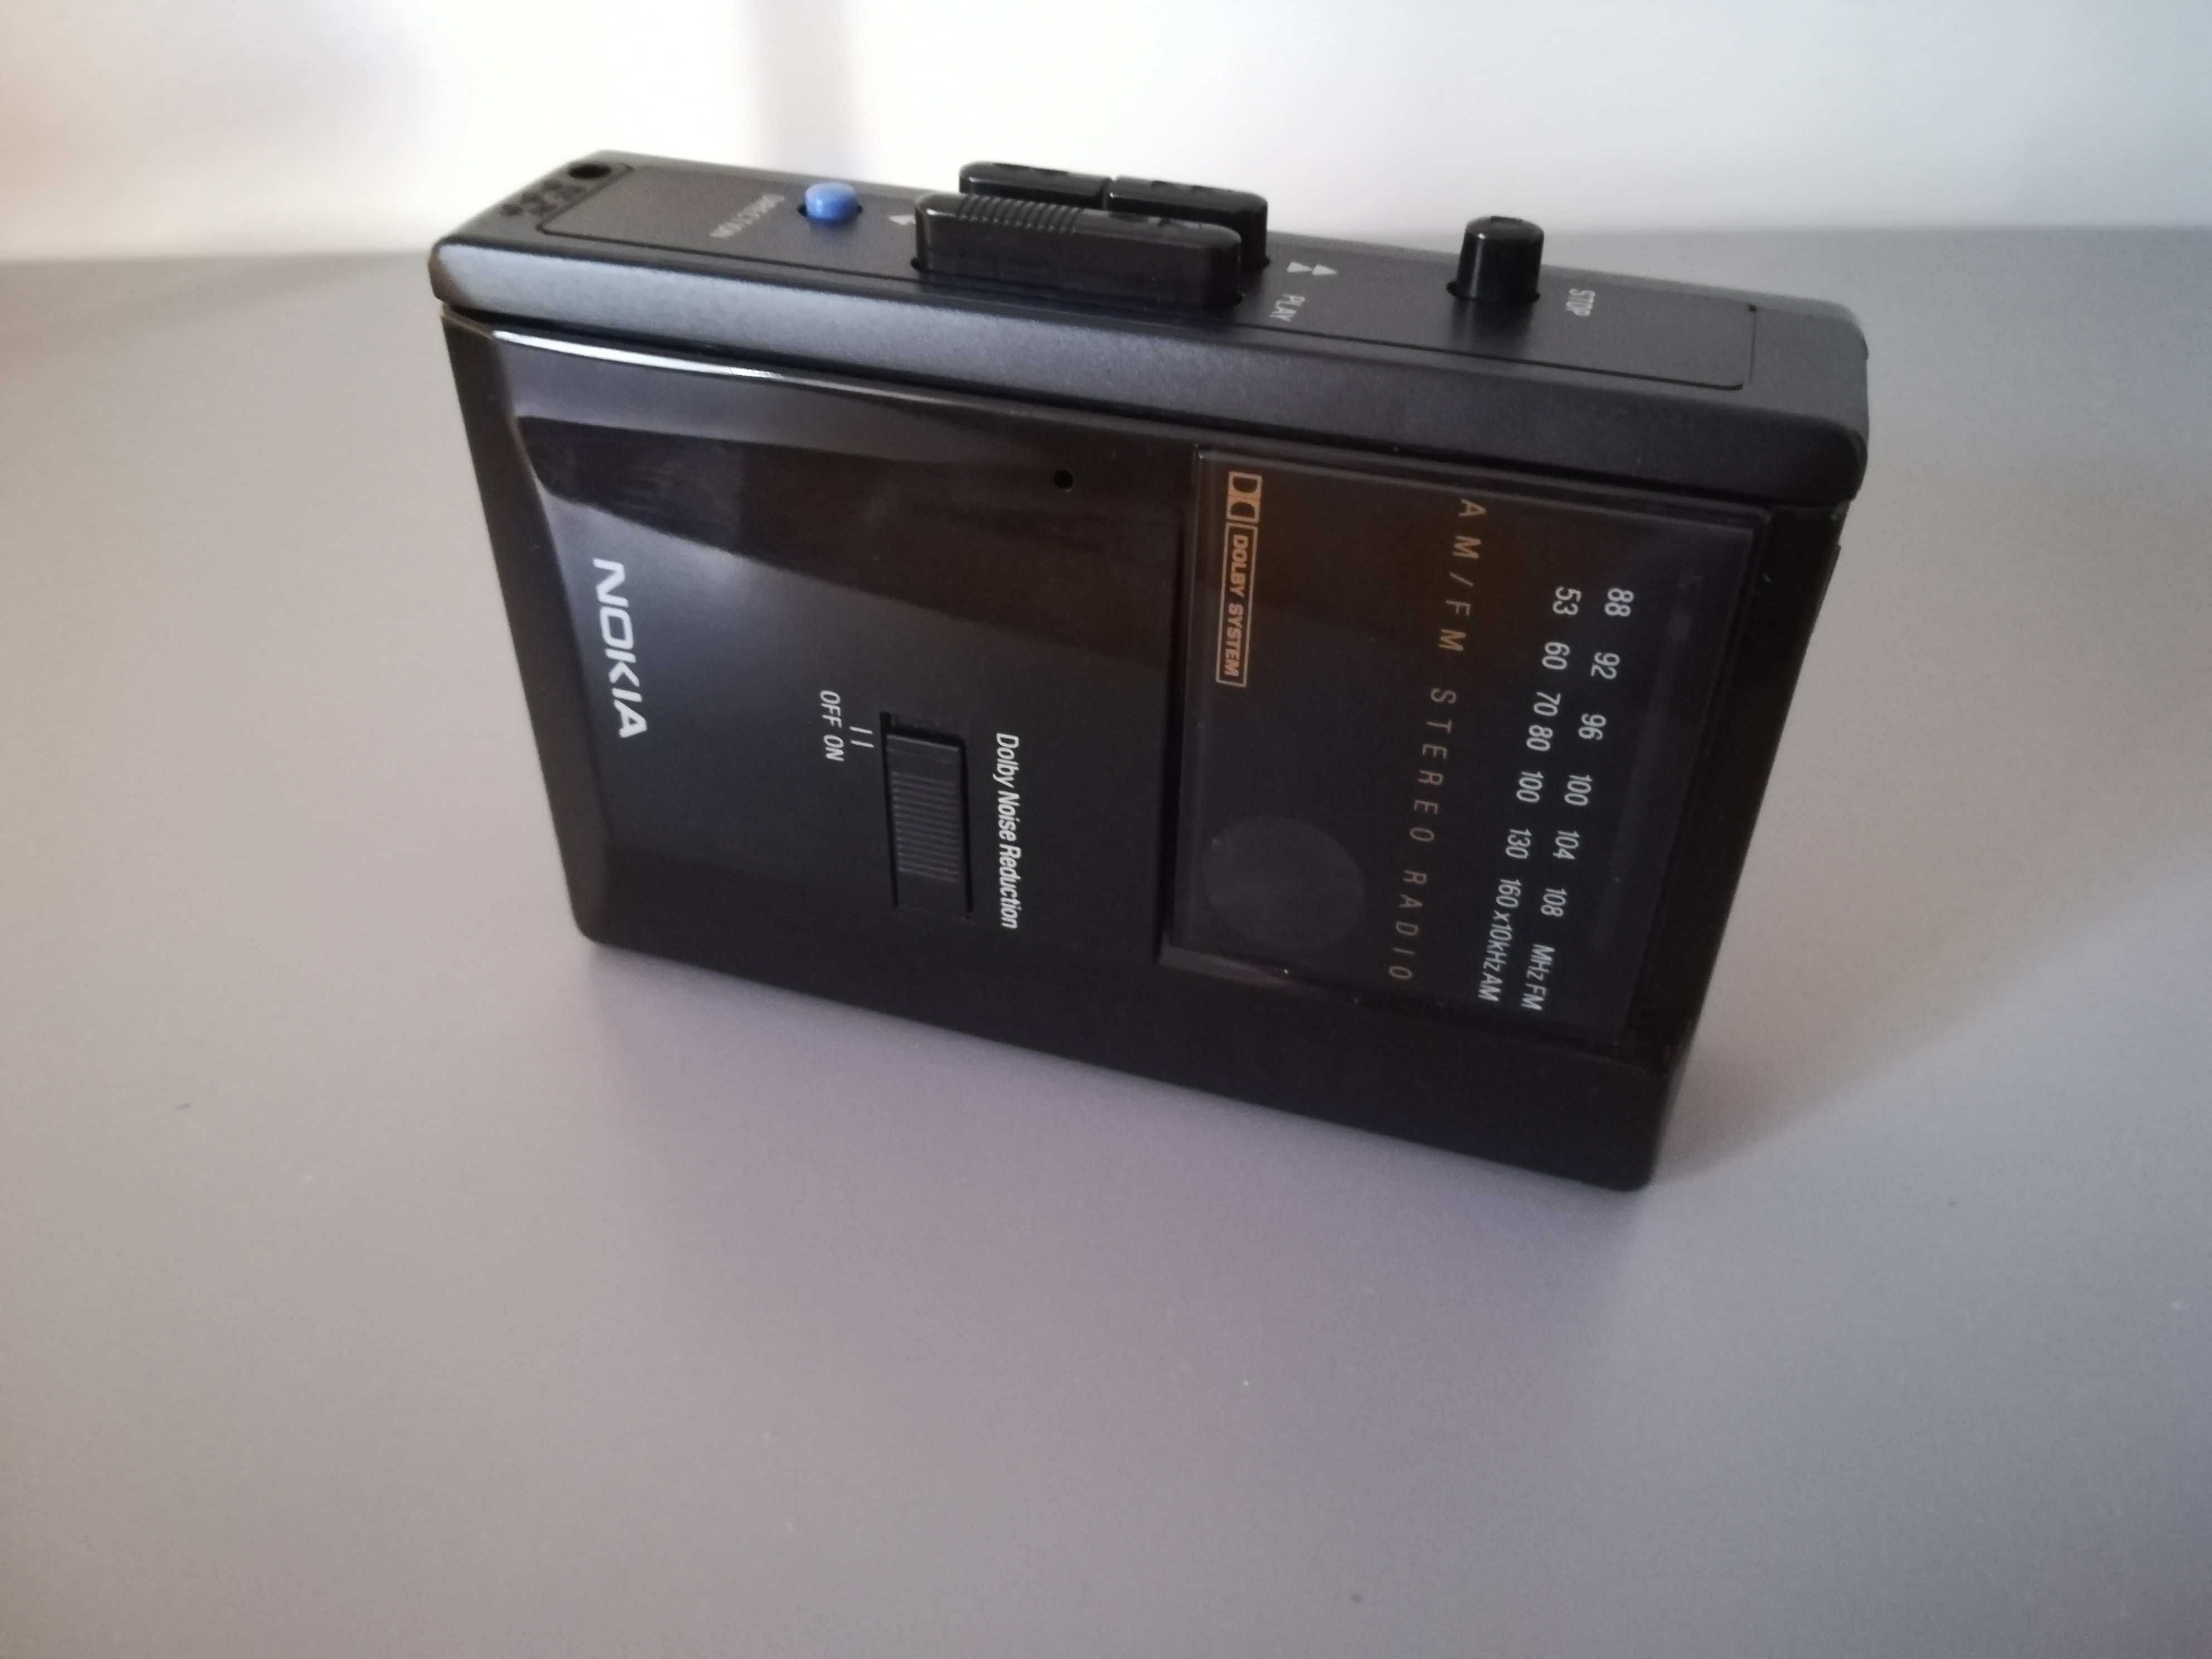 Walkman Luxor Oceanic 9811 (NOVO) - cassette player vintage